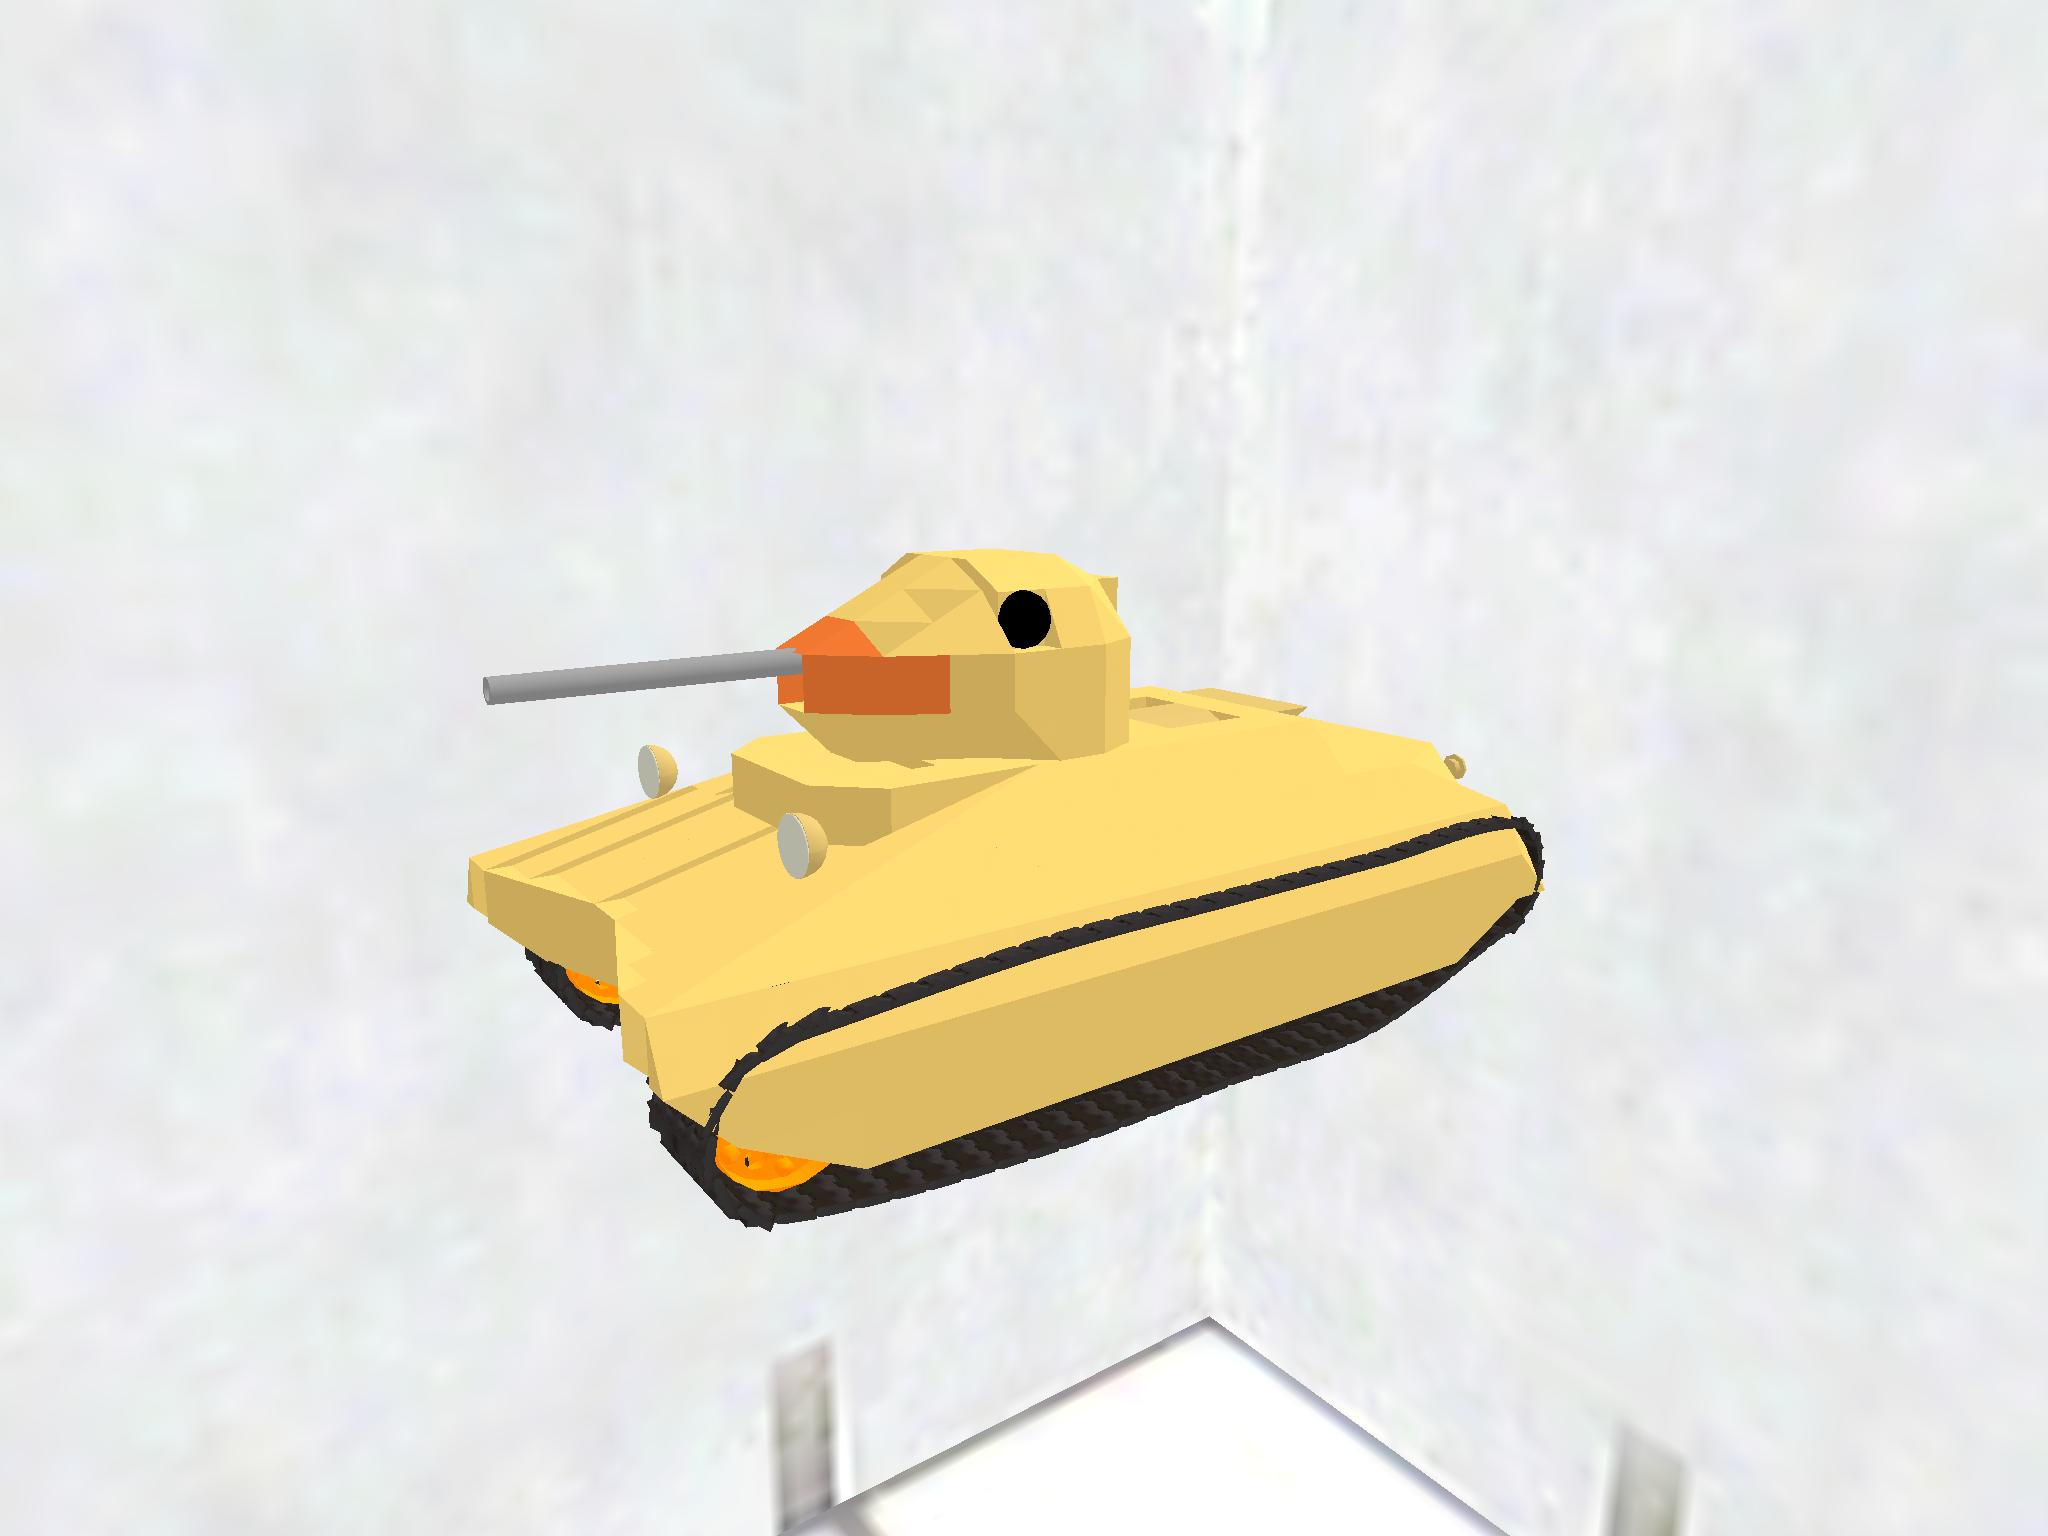 Ducky tank